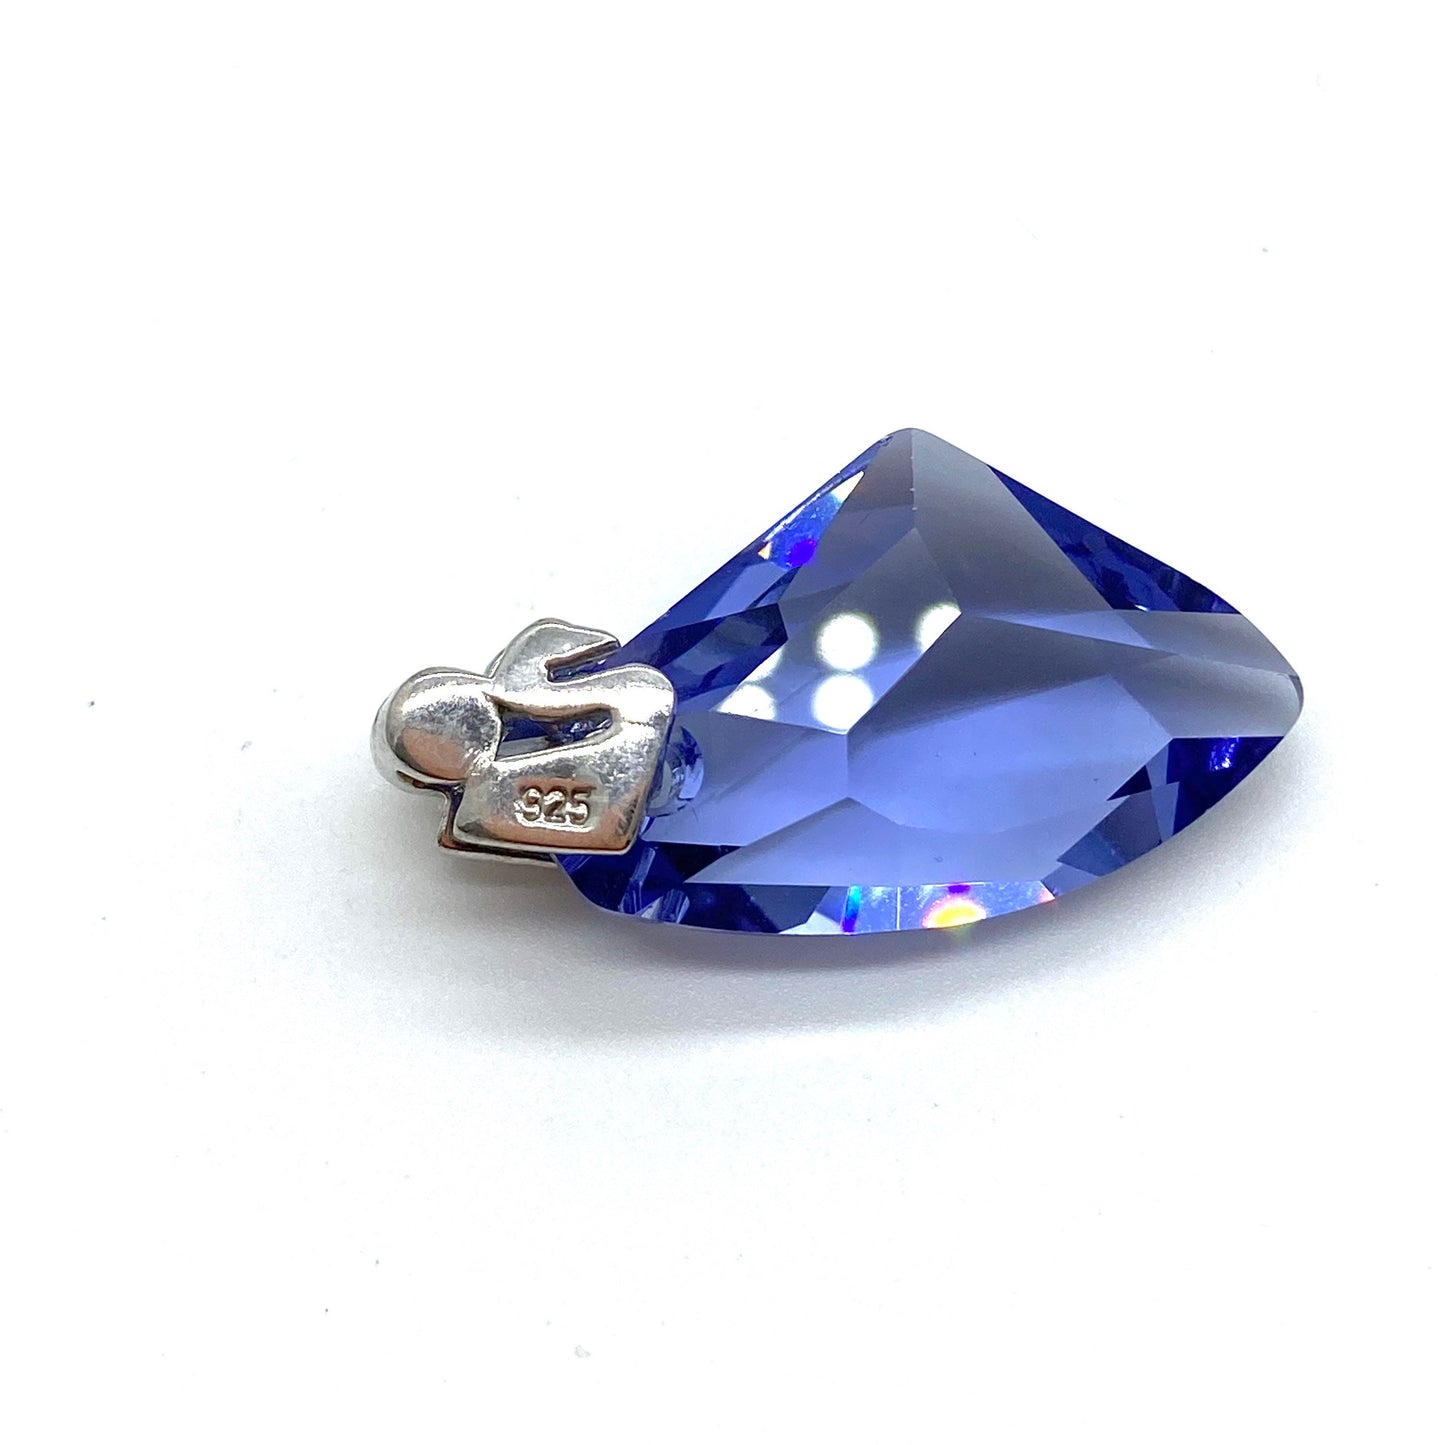 Swarovski Purple/Blue Crystal Pierced Earrings and Matching Pendant with Original Box